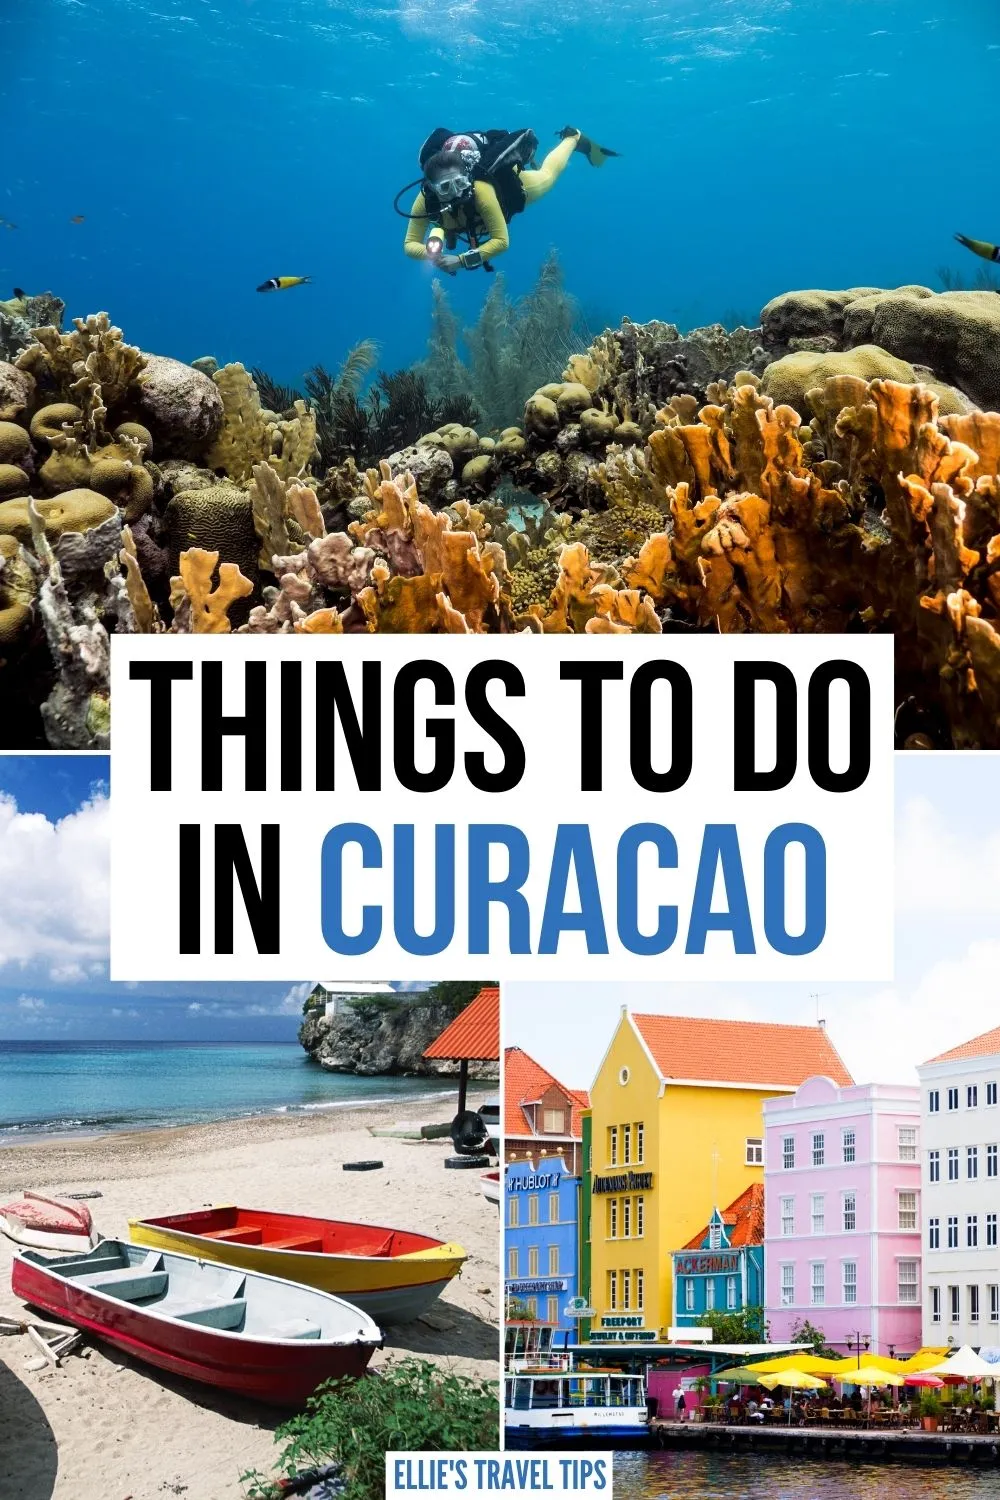 curacao island attractions